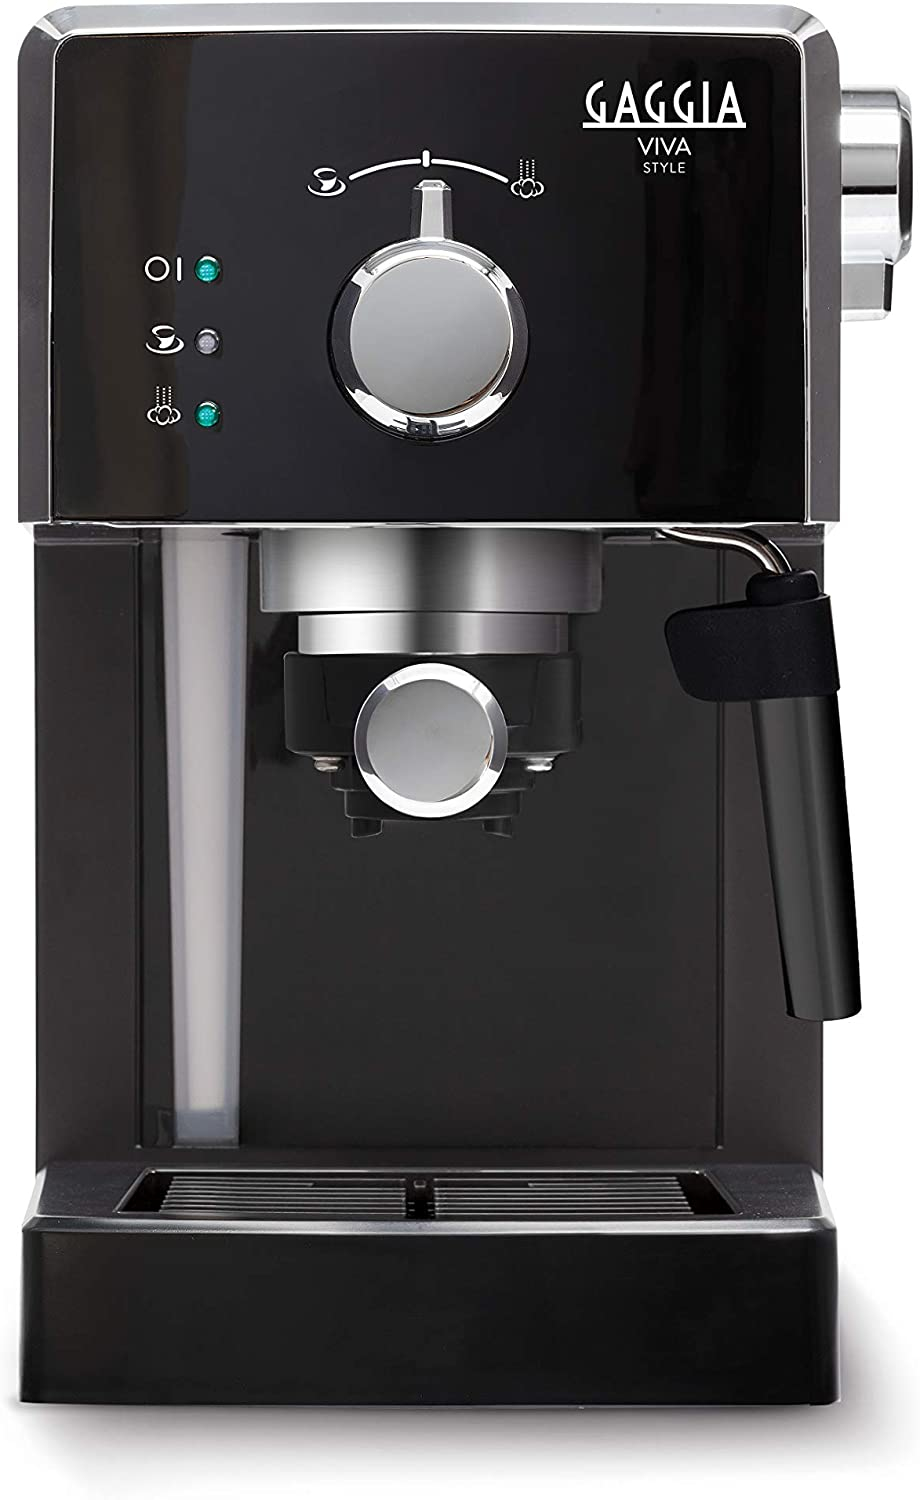 Gaggia ri8433/11 viva style macchina da caffè espresso manuale, per maci